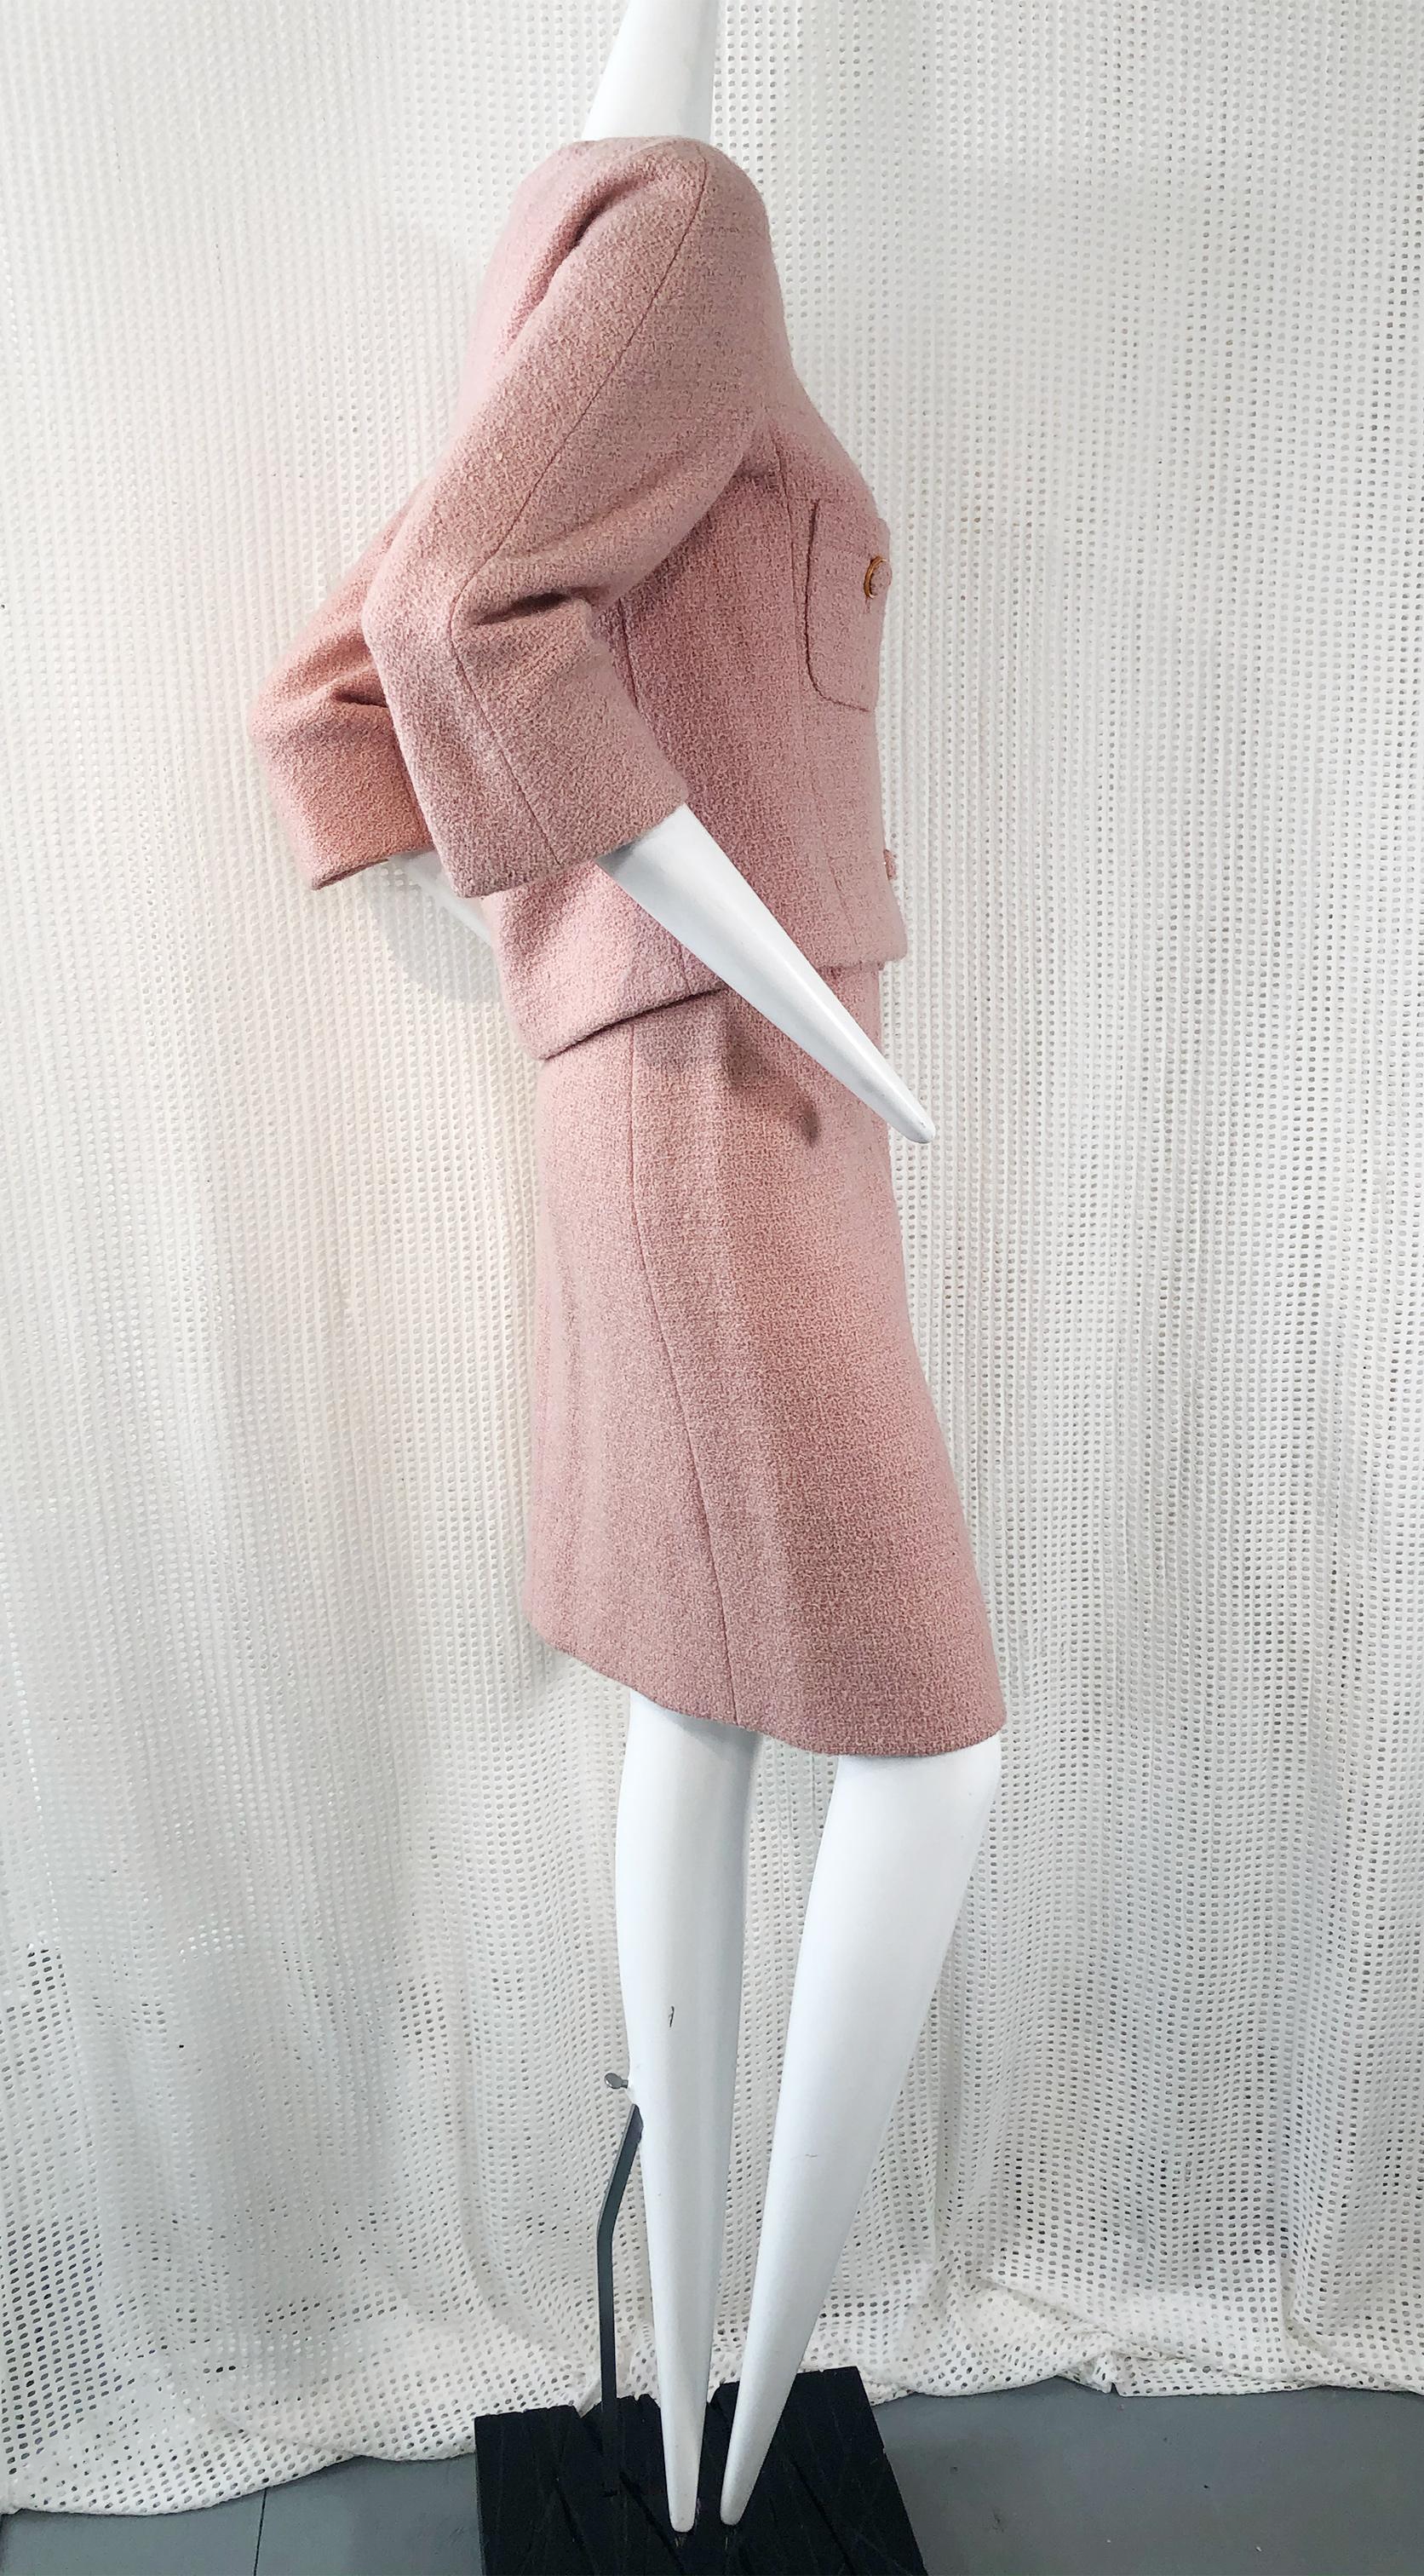 Christian Dior Frühjahrs-Minirock-Anzug aus Wolle Boucl in Altrosa, 1960er Jahre (Braun)